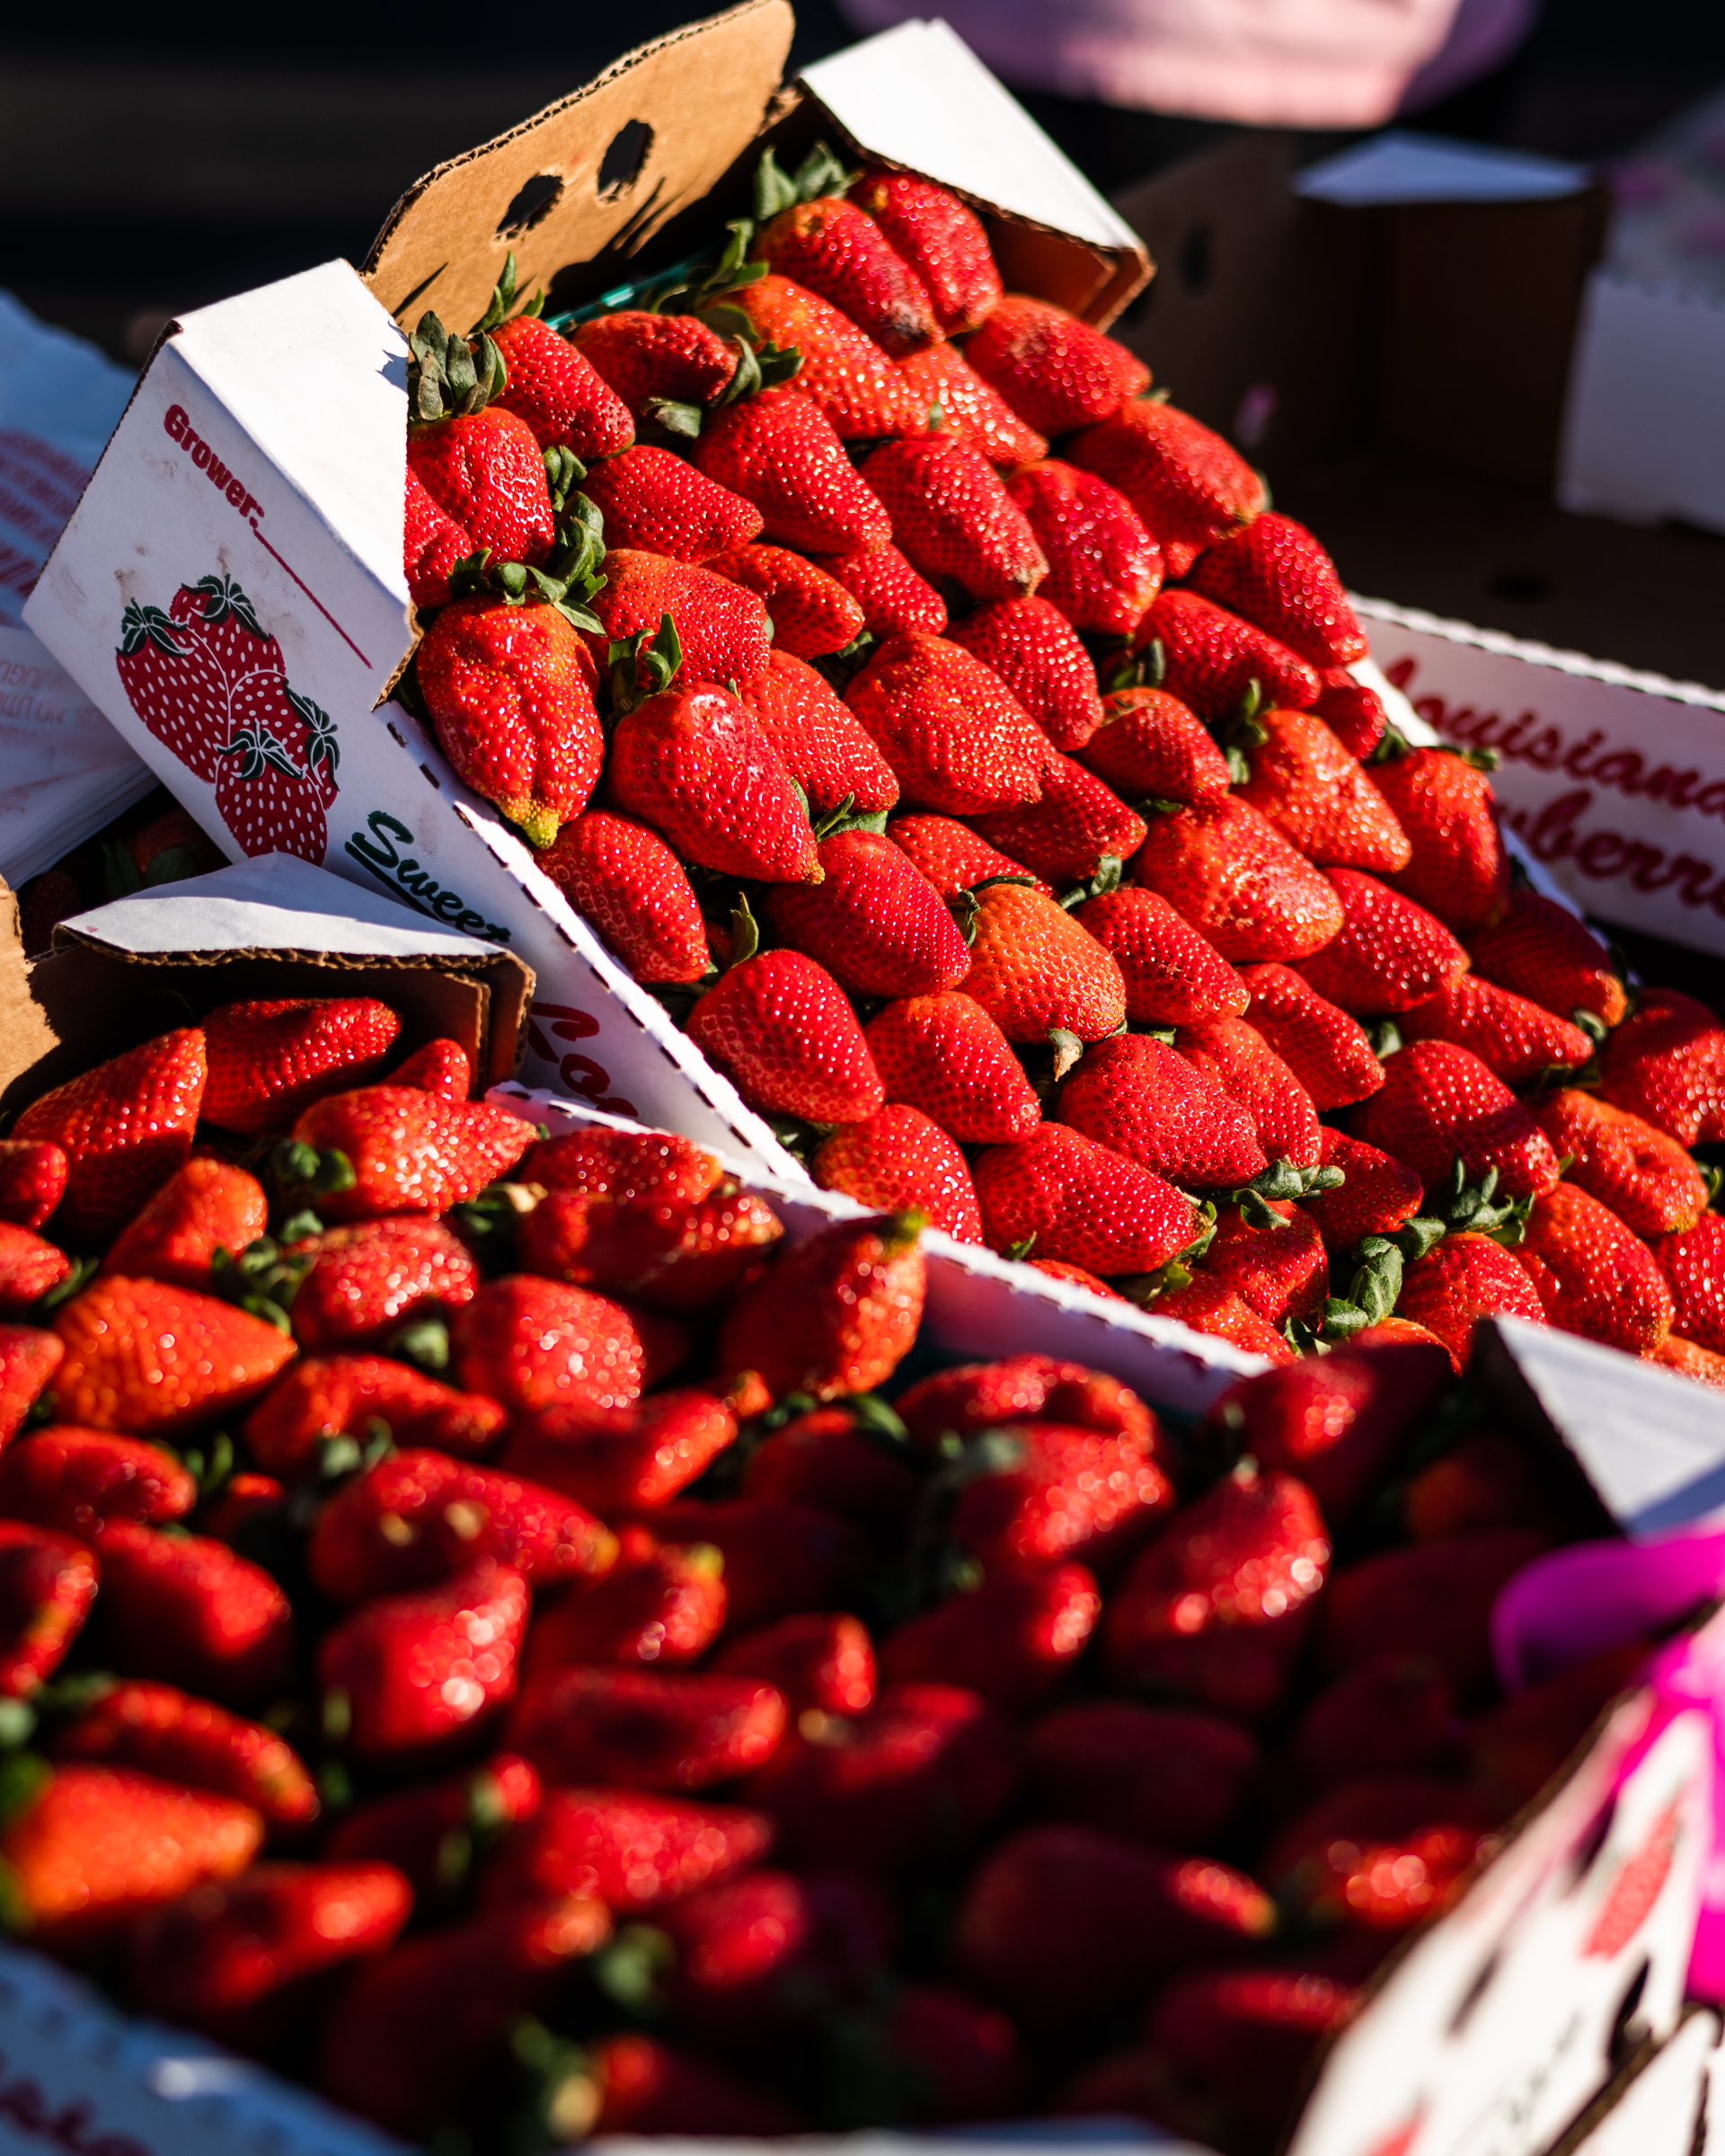 Fresh Louisiana strawberries on display at the farmers market